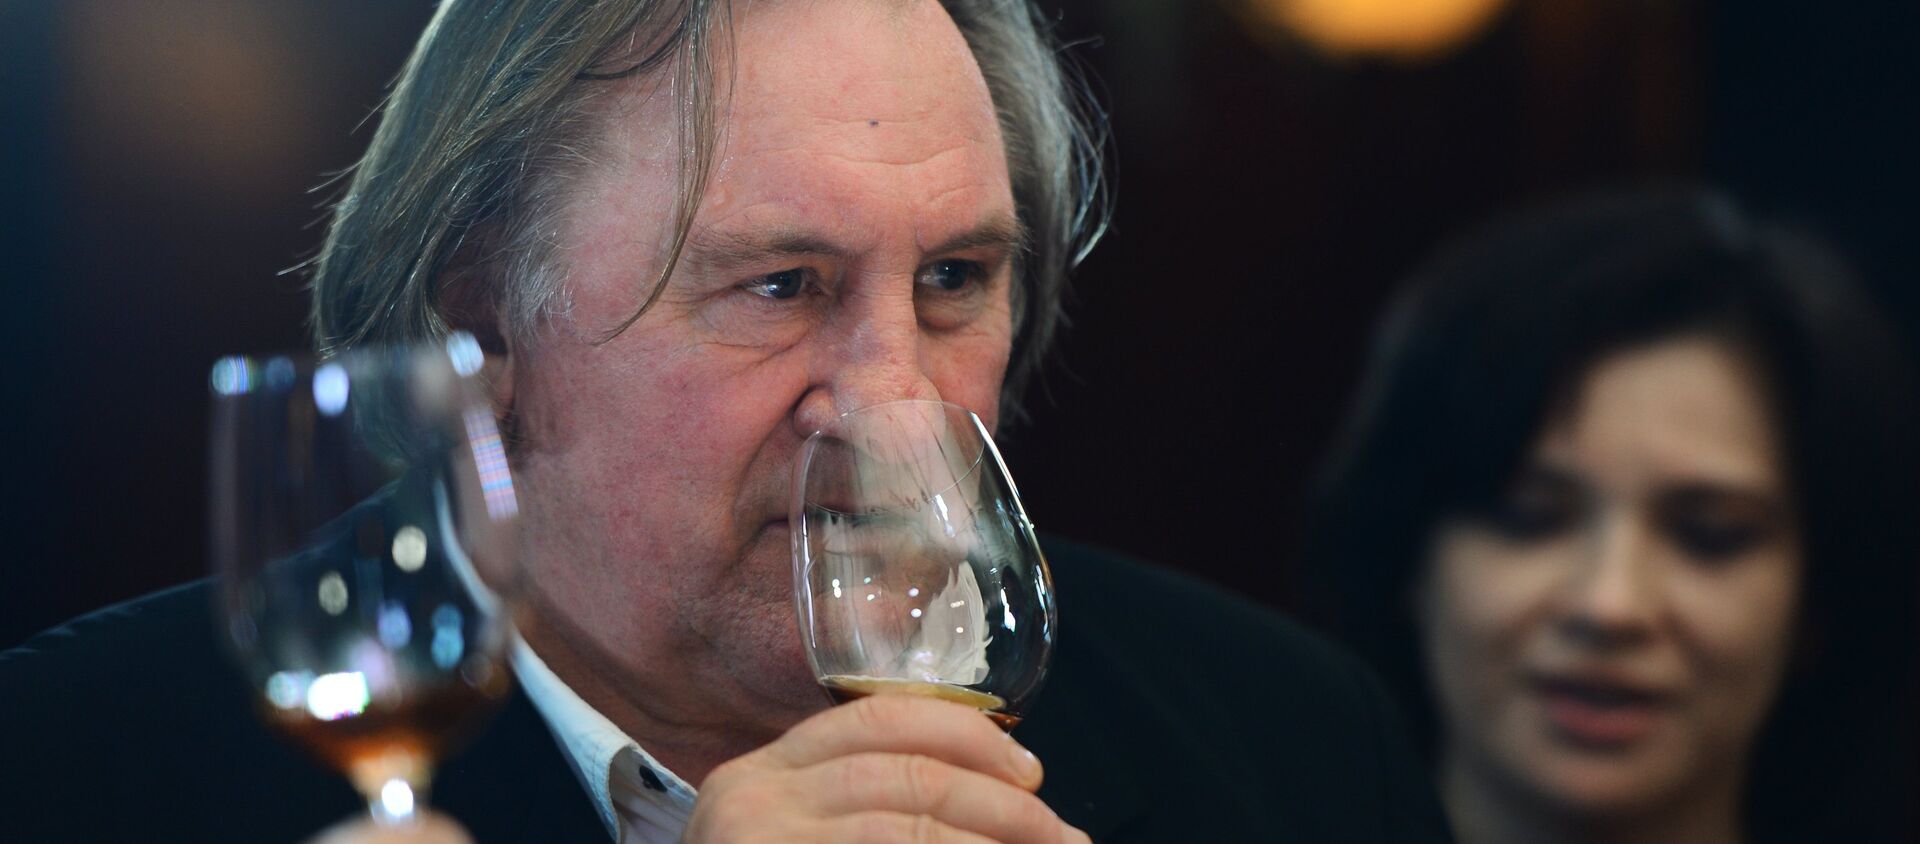 Actor Gerard Depardieu tastes Crimean wines in a Moscow restaurant. - Sputnik International, 1920, 30.08.2020